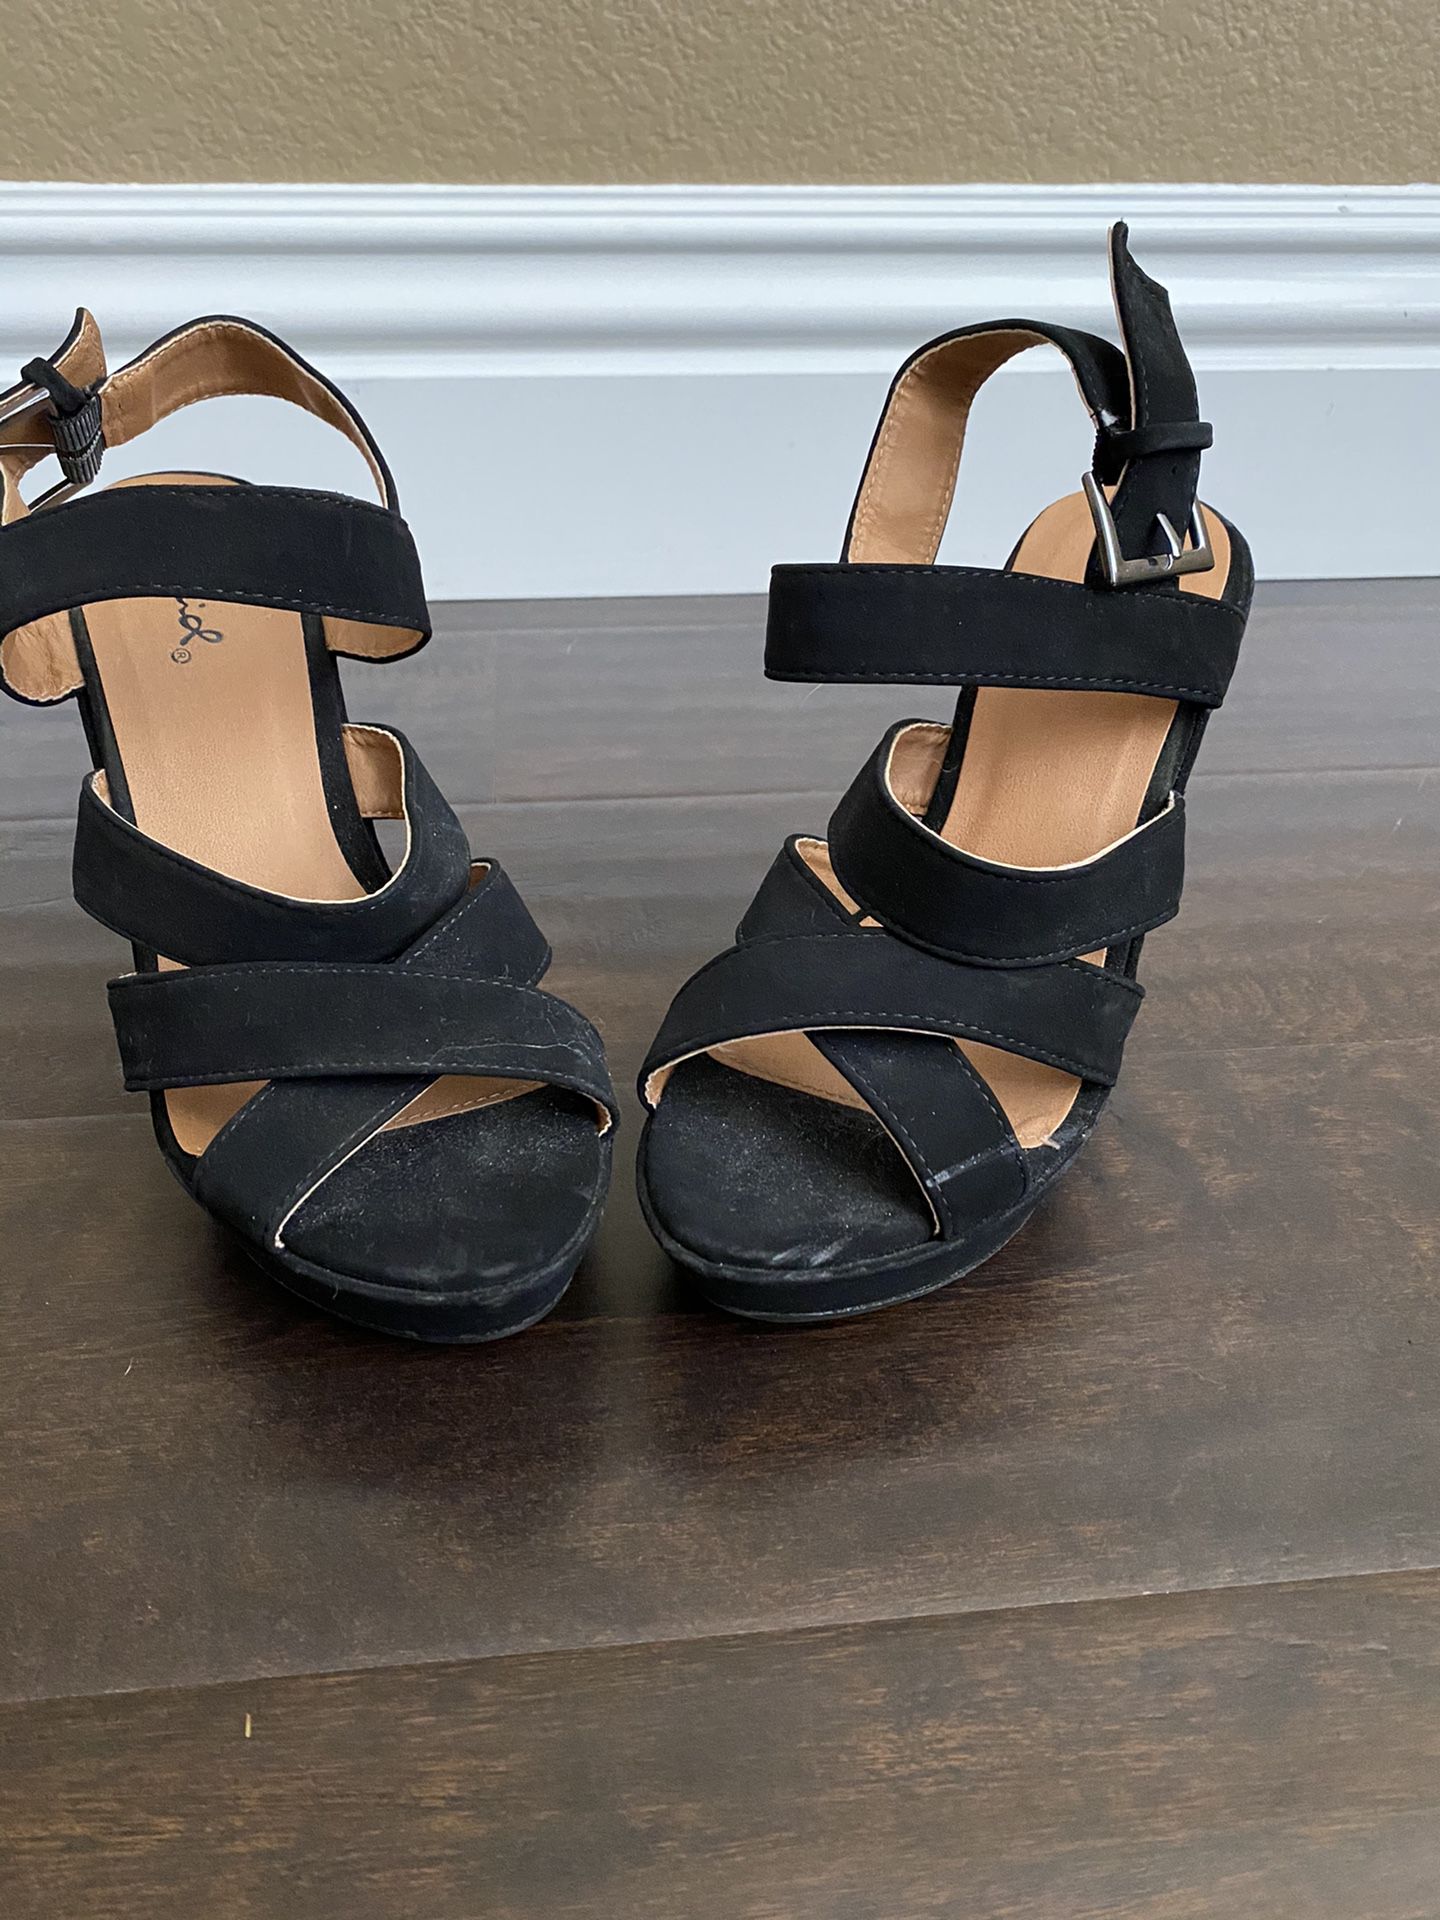 Wedge heels size size 7-7.5 black